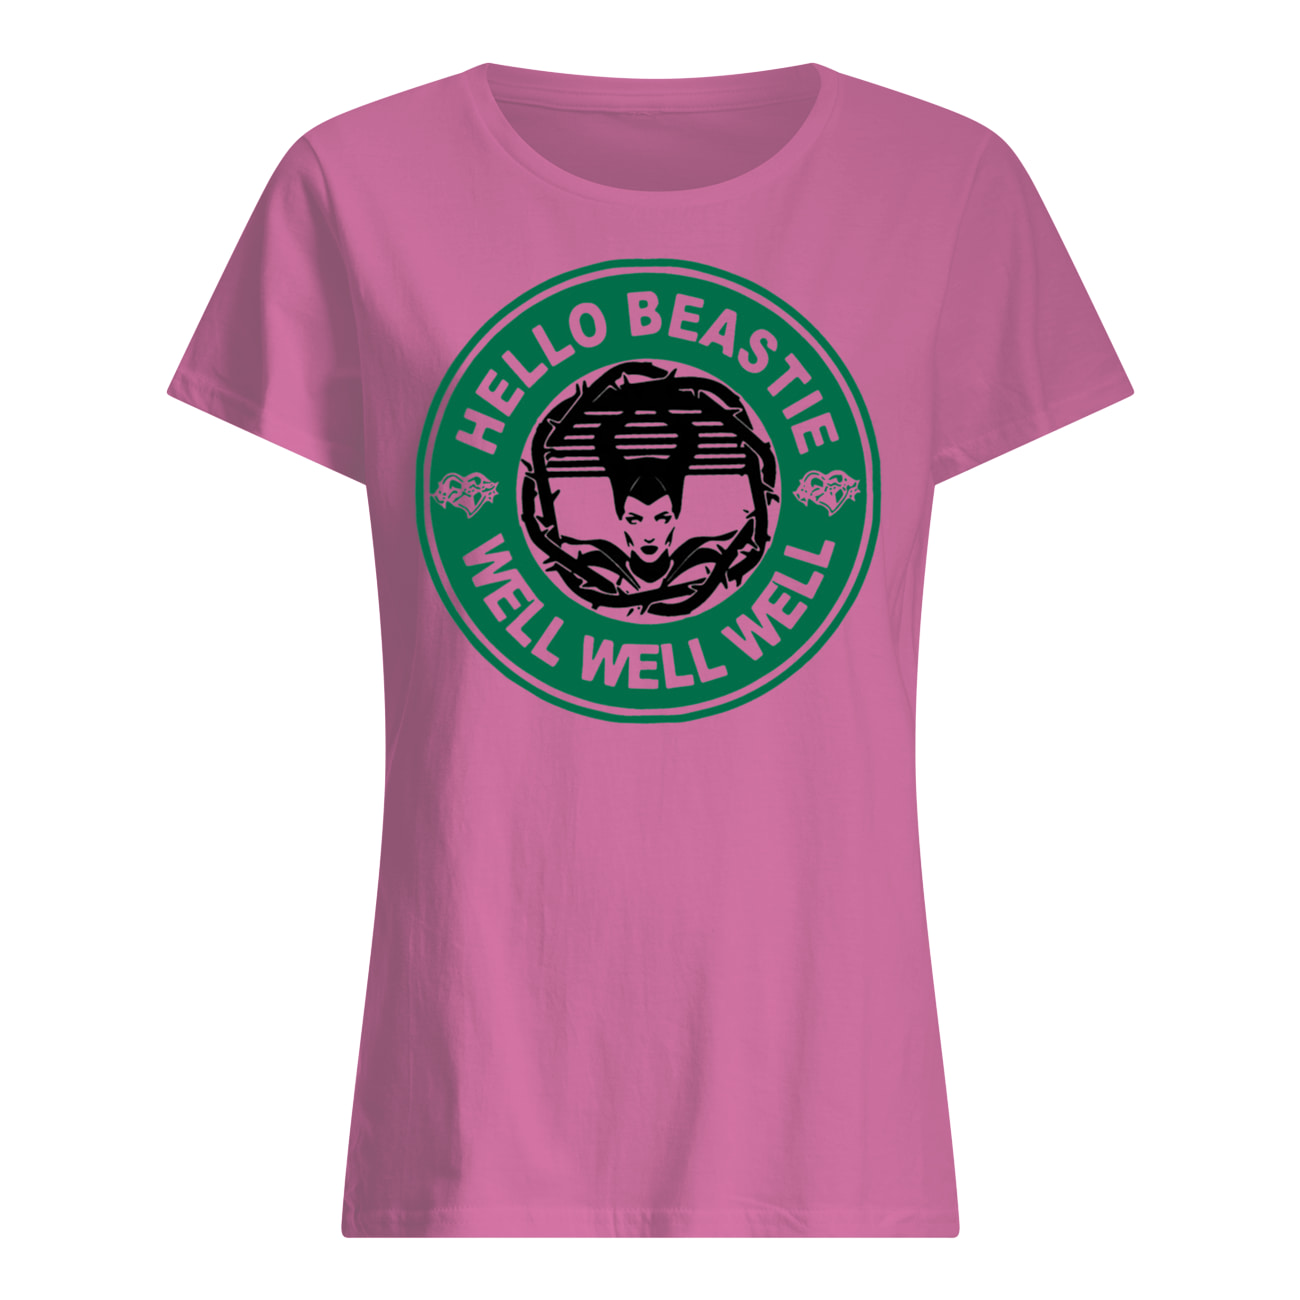 Hello beastie well well well maleficent starbuck coffee womens shirt